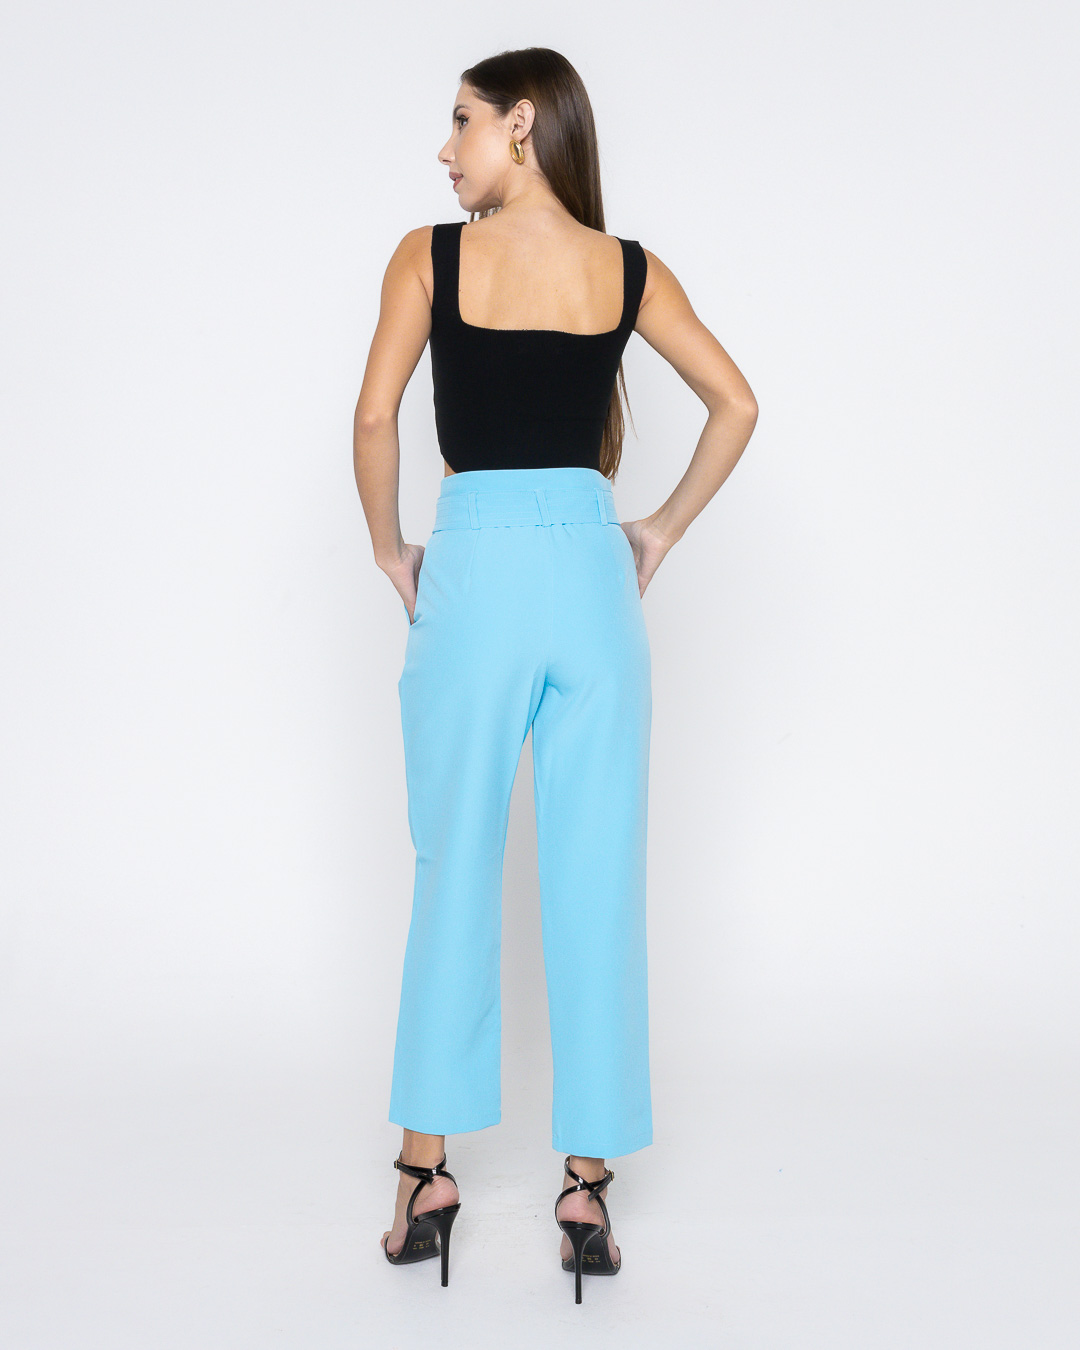 Dot Clothing - Pants Dot Clothing Tailor Blue - 1682AZUL